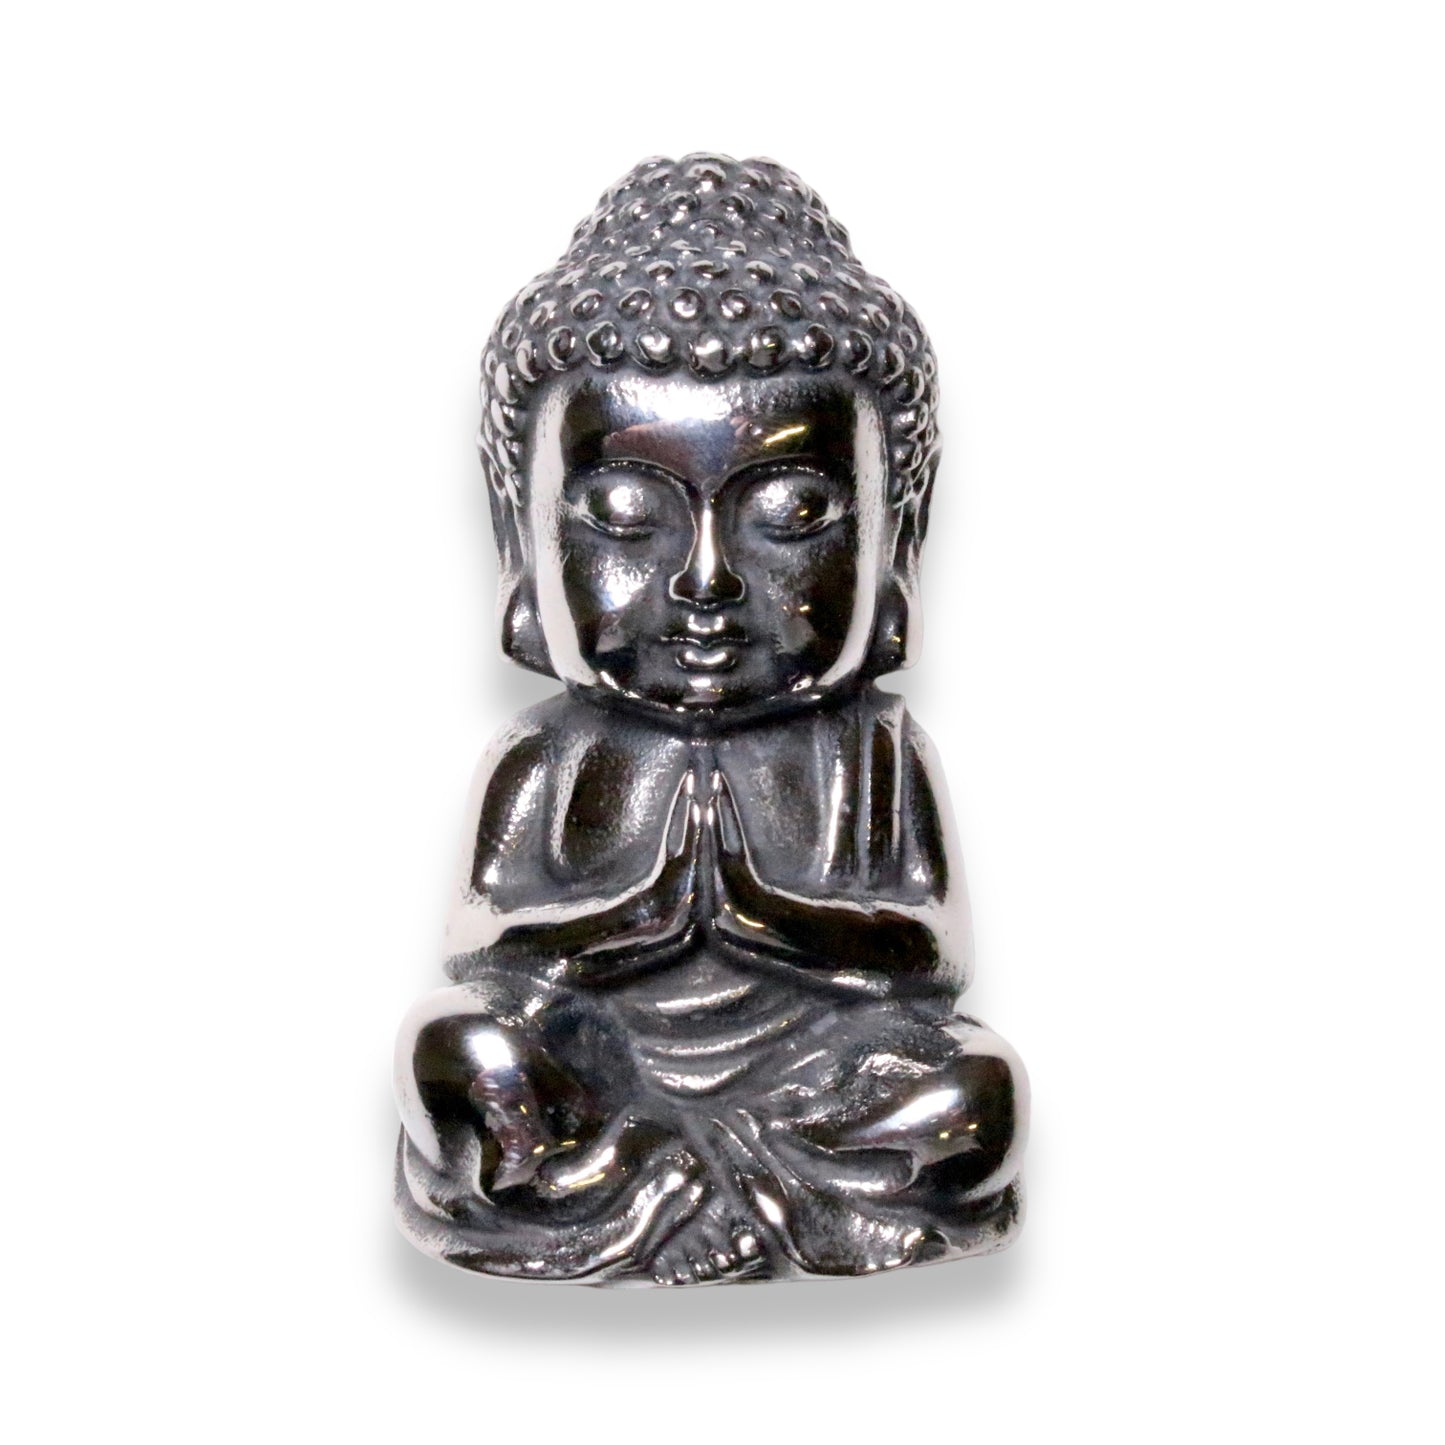 Stainless steel Buddha